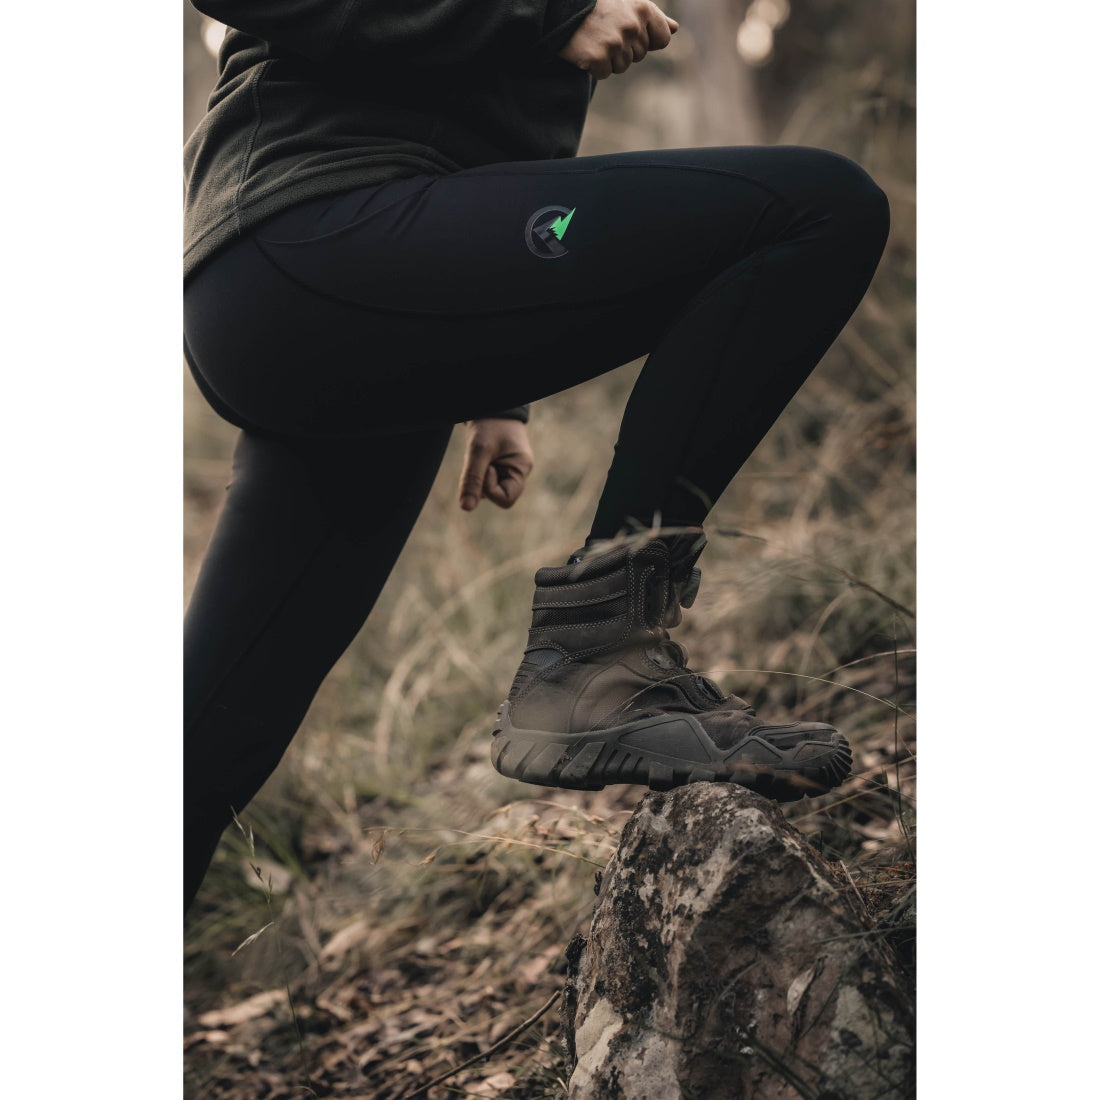 Woman climbing up rock in Ridgeline Womens Infinity Leggings